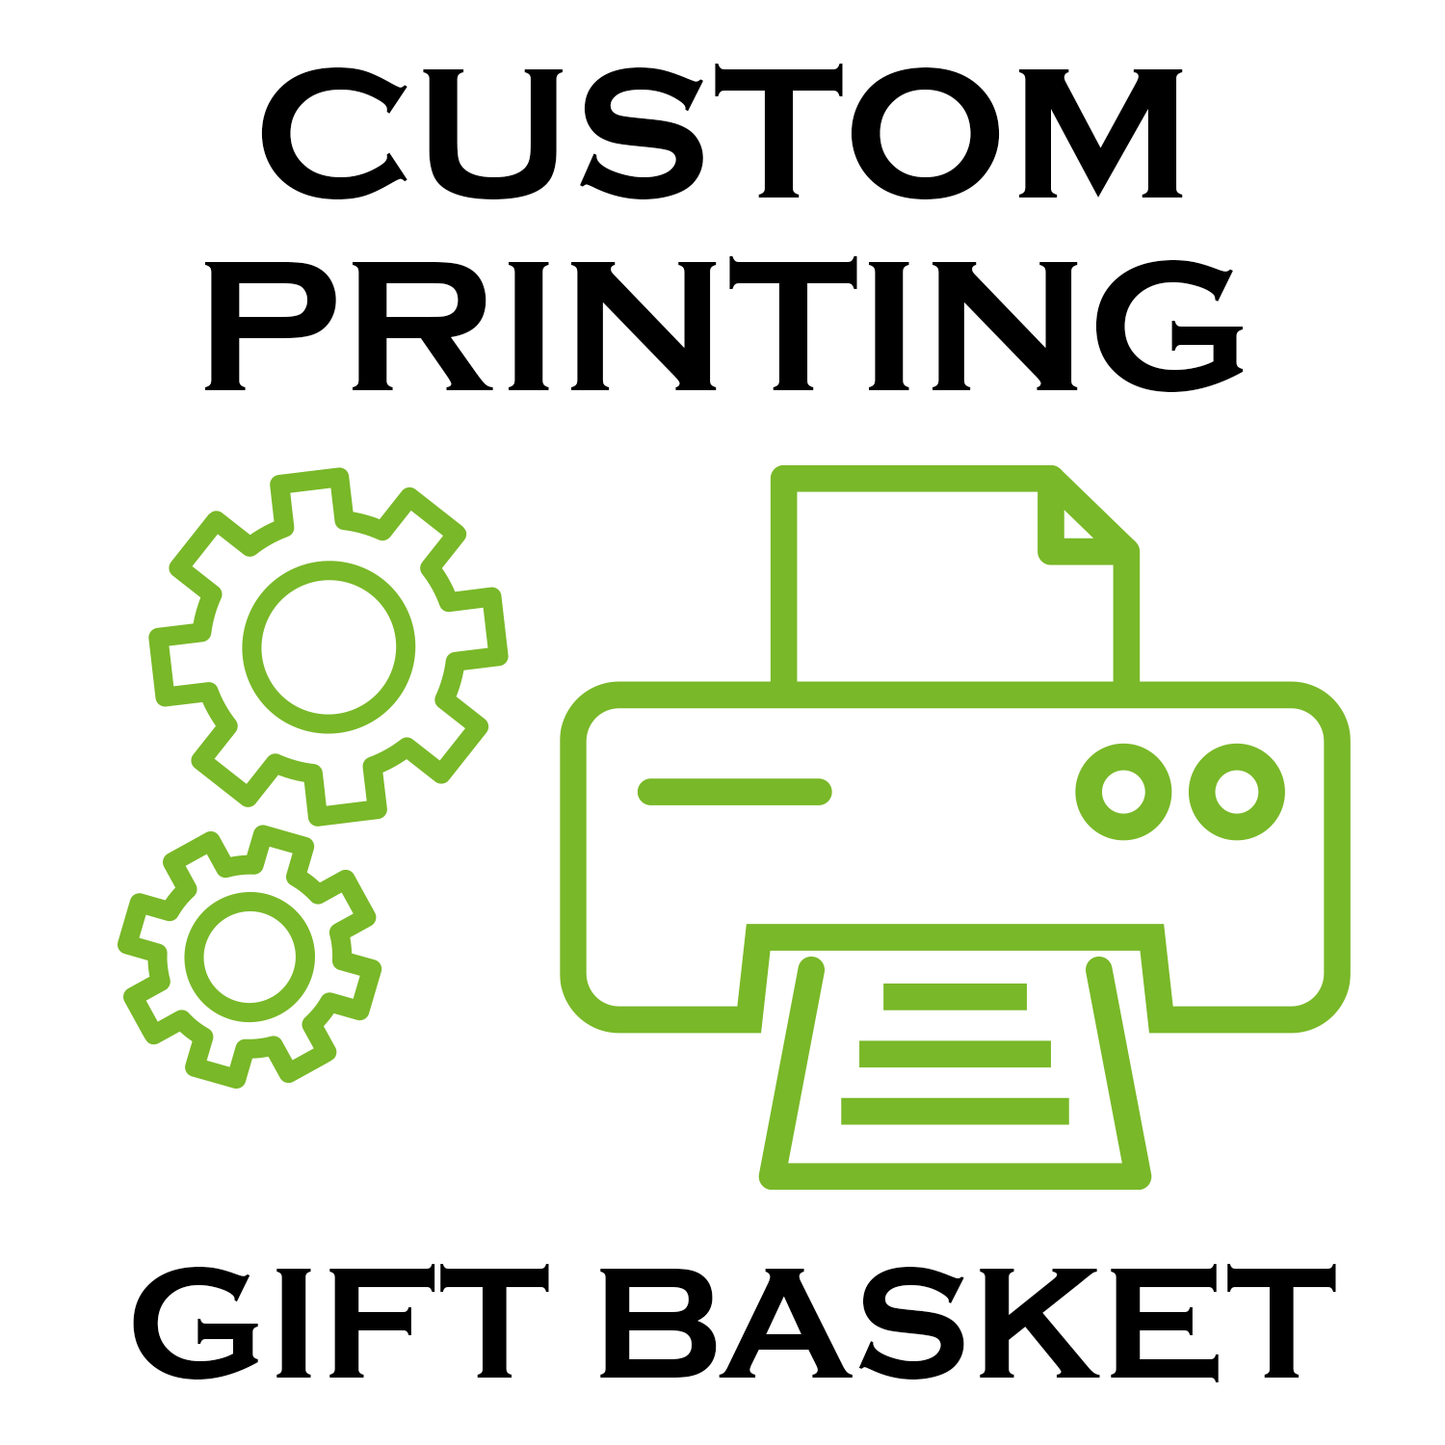 Custom Image or Logo Printing Service